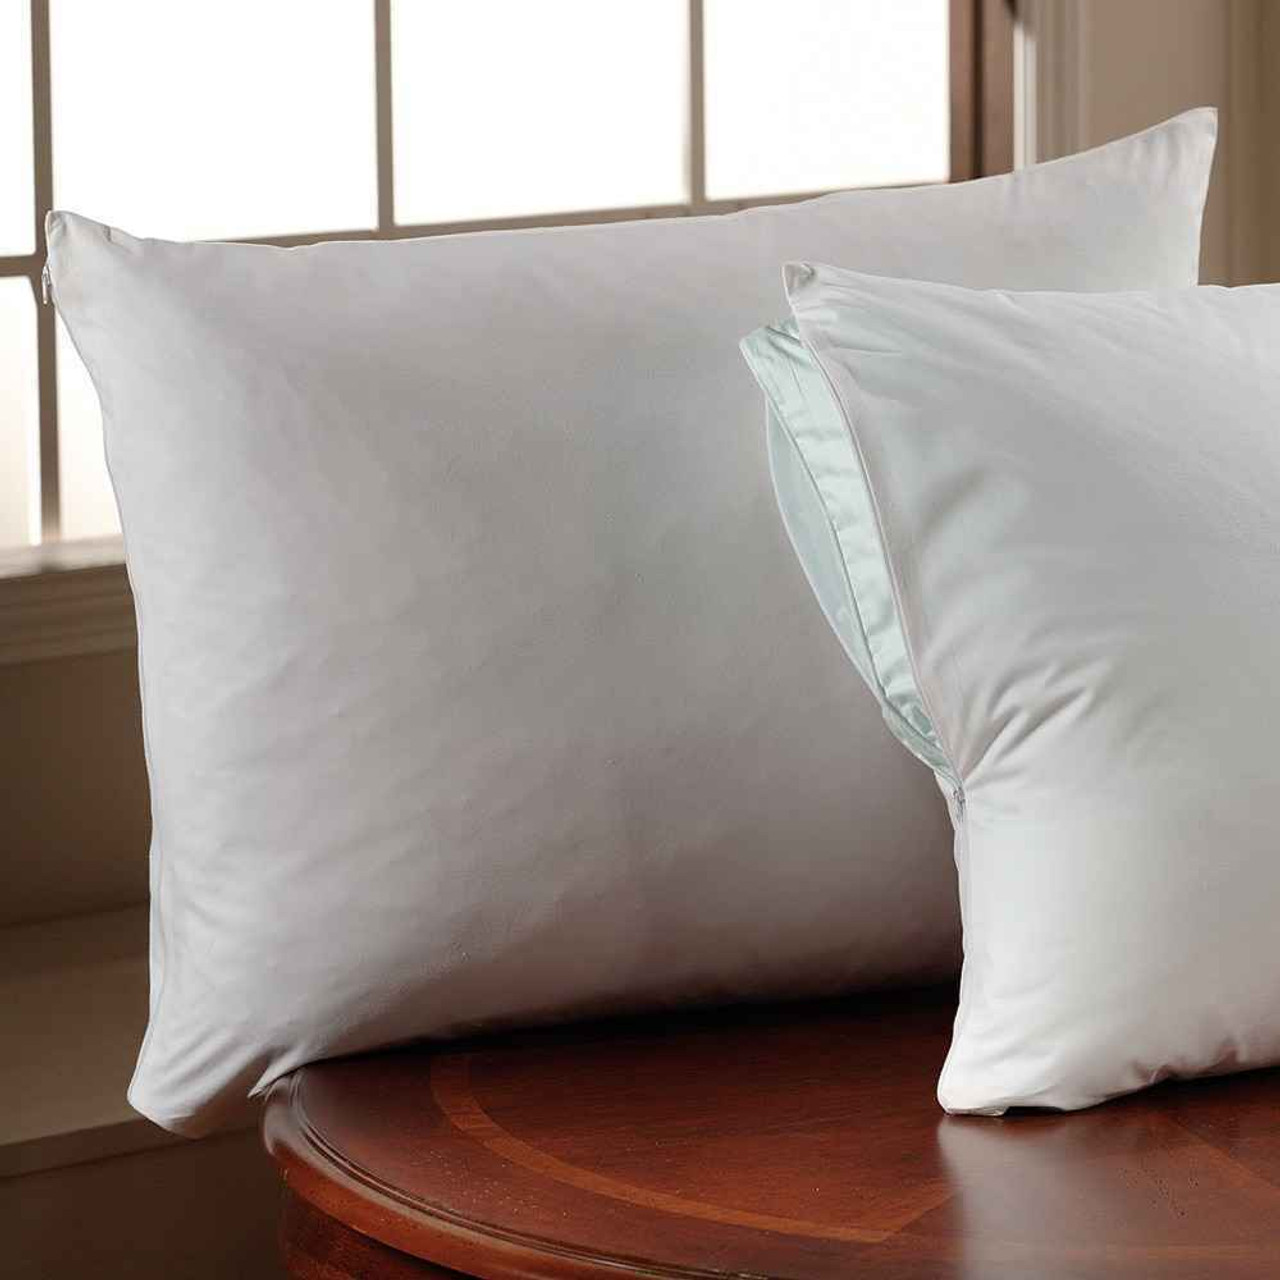 Cotton Zippered Pillow Protector